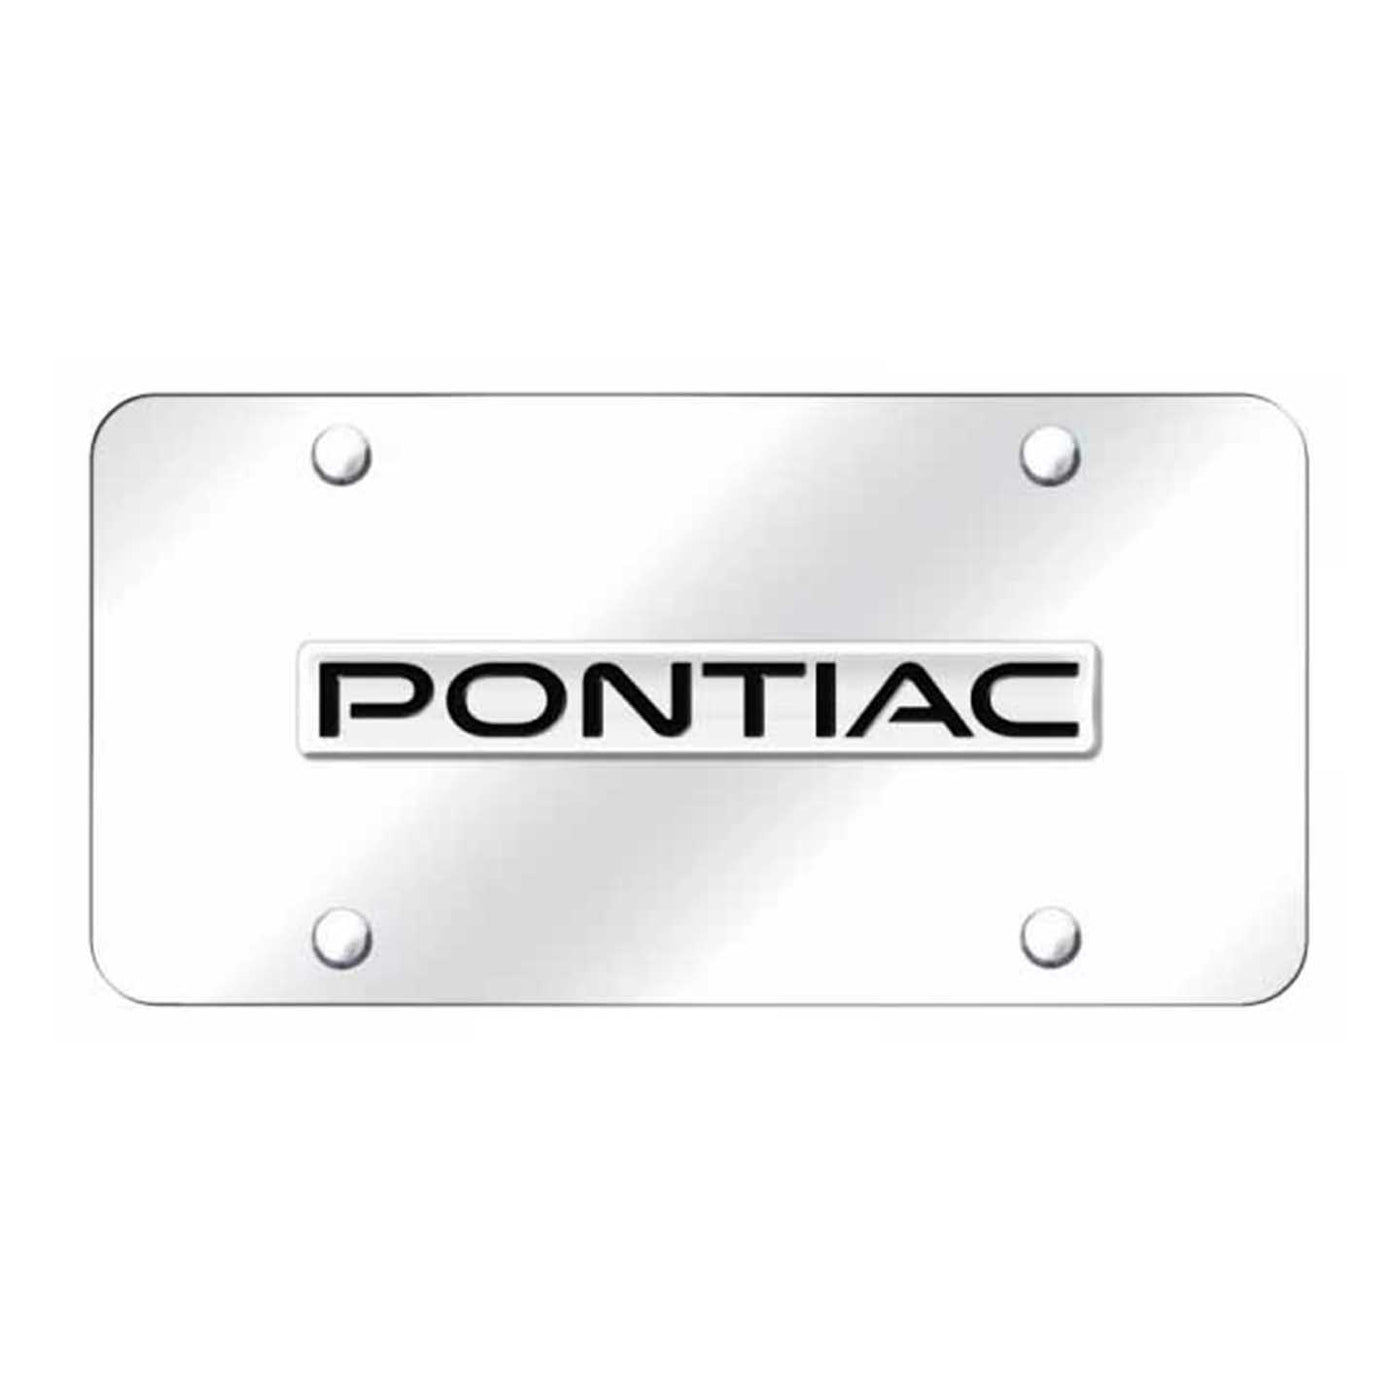 Pontiac Name License Plate - Chrome on Mirrored